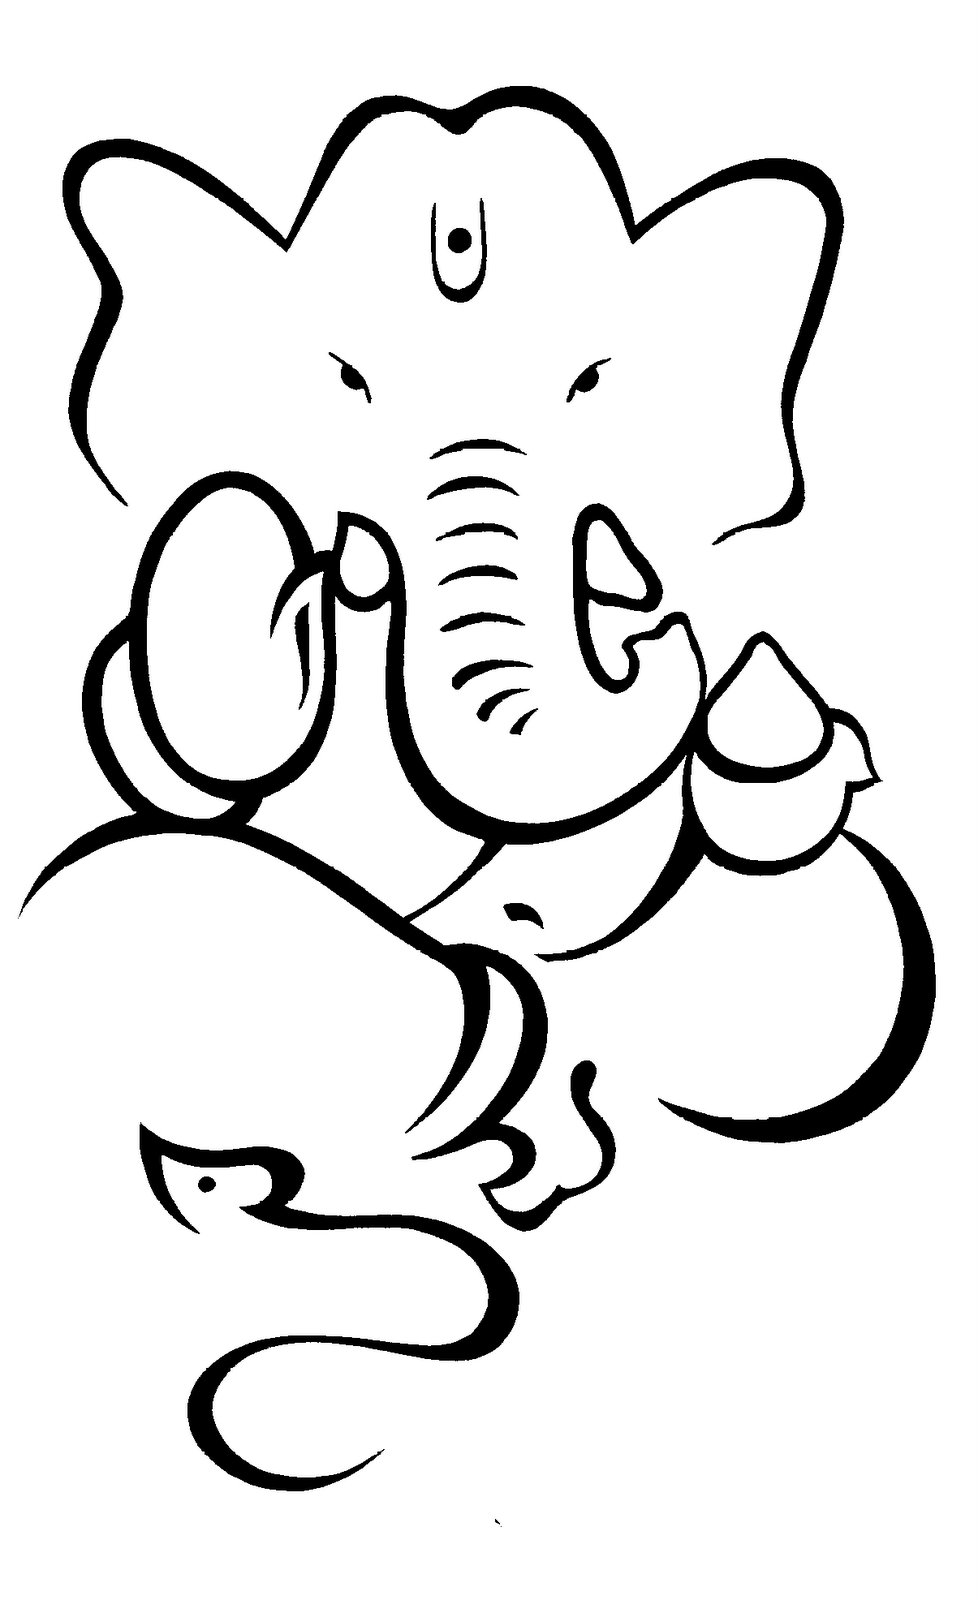 Elephant face hindu.